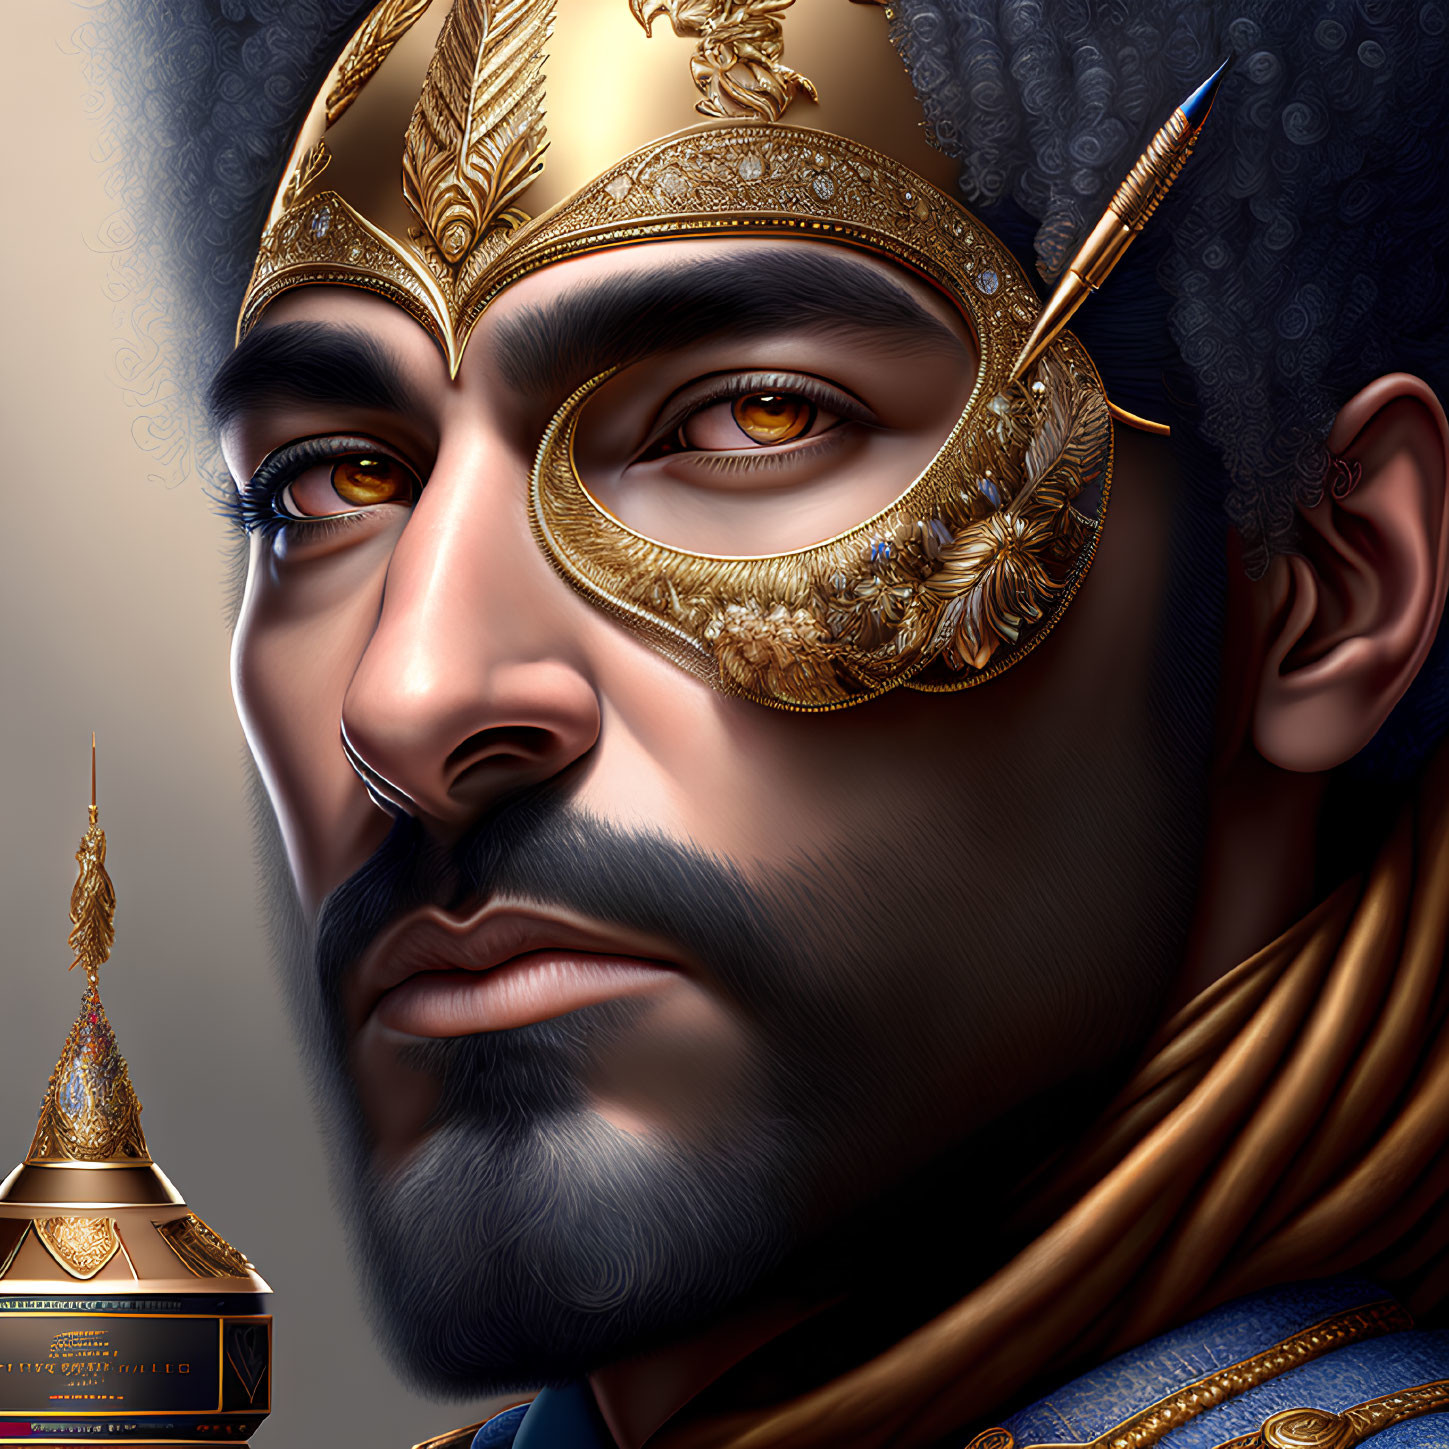 Detailed digital portrait of a man with golden ornamental headgear and eyepatch, exuding reg